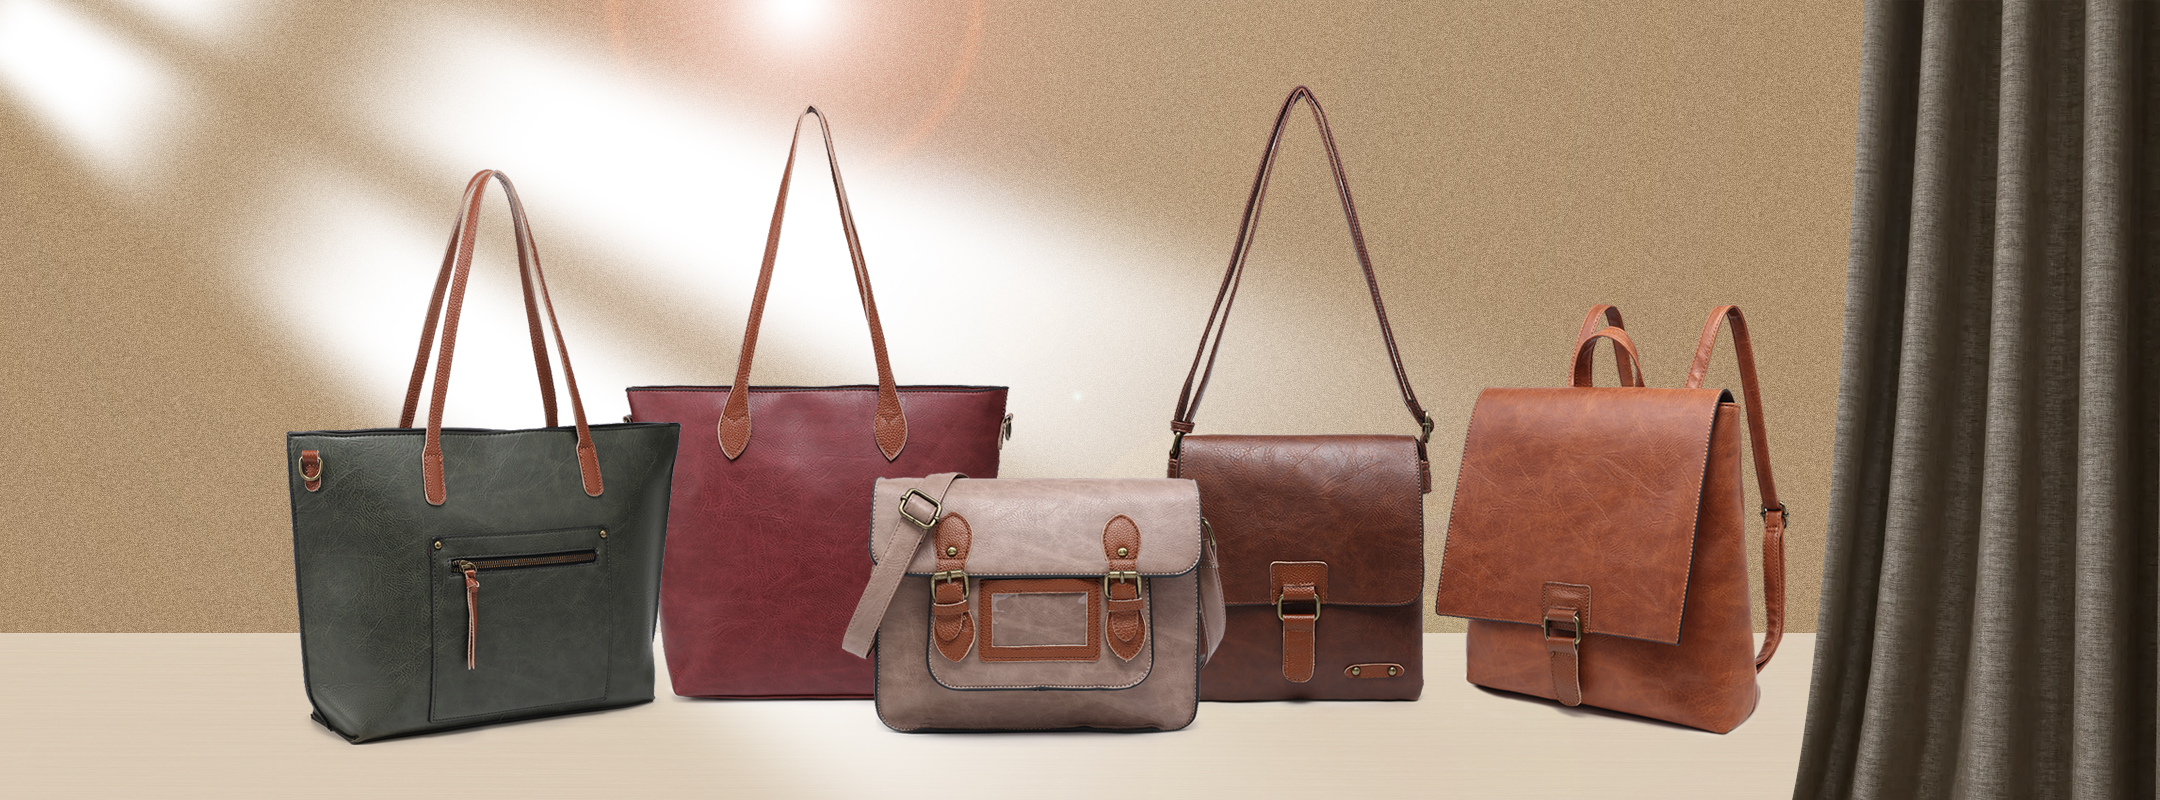 promotional handbags wholesale purses and handbags| Alibaba.com